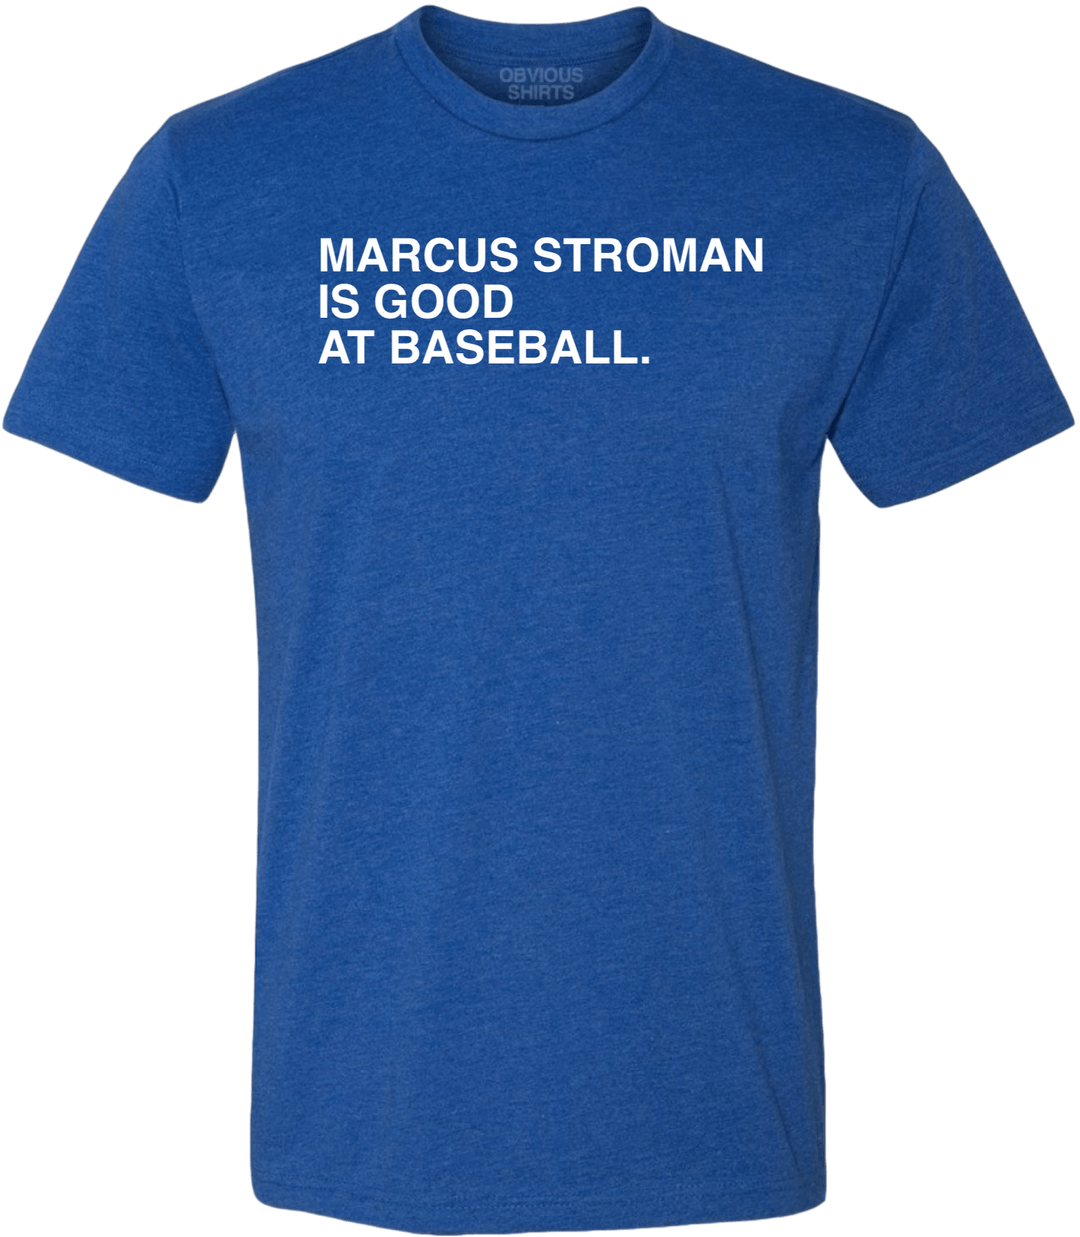 MARCUS STROMAN IS GOOD AT BASEBALL. - OBVIOUS SHIRTS.